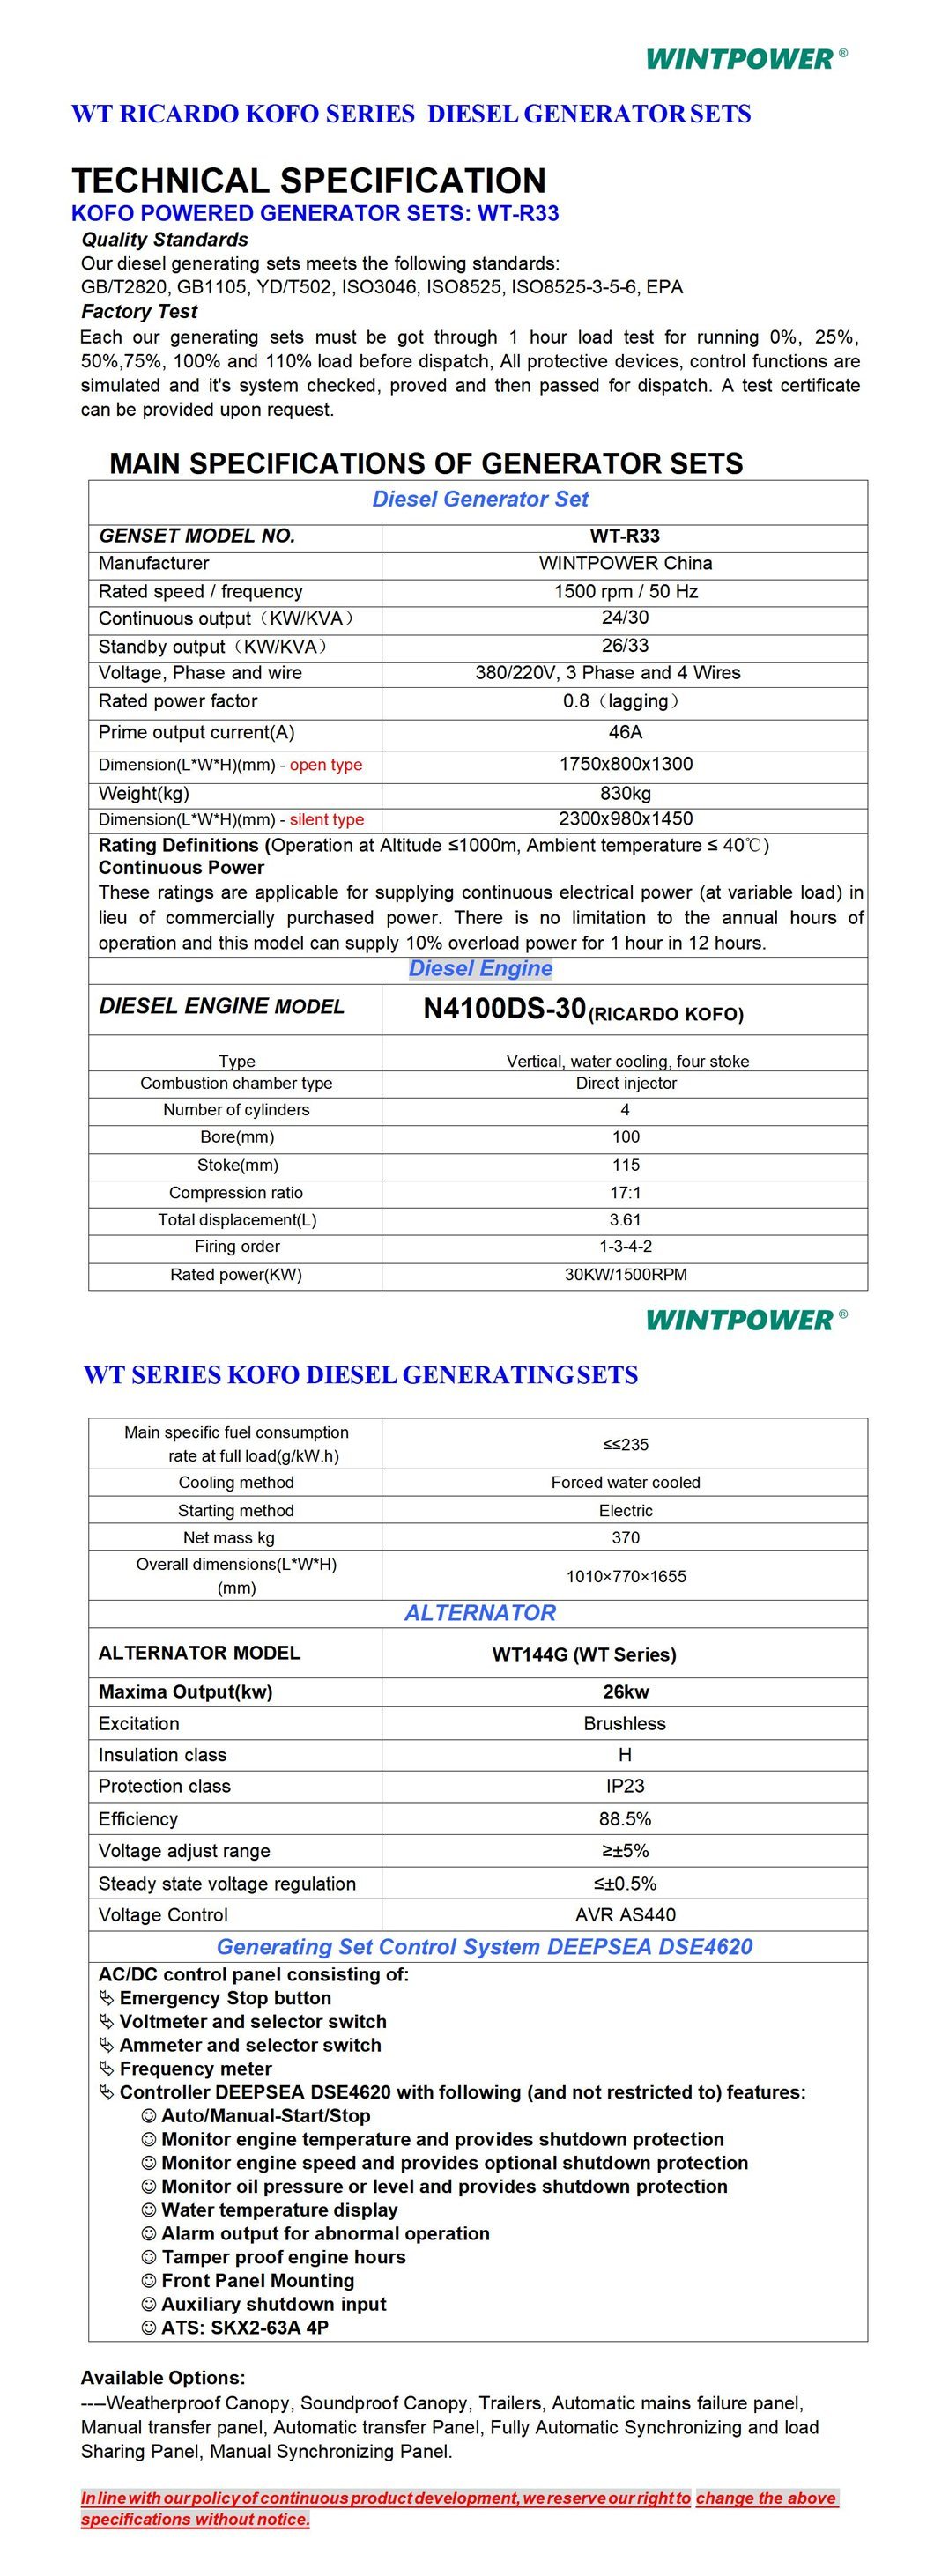 Weichai Kofo Ricardo Diesel Power Generator Set Dg Genset 100kVA 4rt55-88d R6105zlds 110kVA 4rt55-110d 120kVA R6105azlds 138kVA R6105bzlds 165kVA 6105bzlds 165kVA R6105bzlds